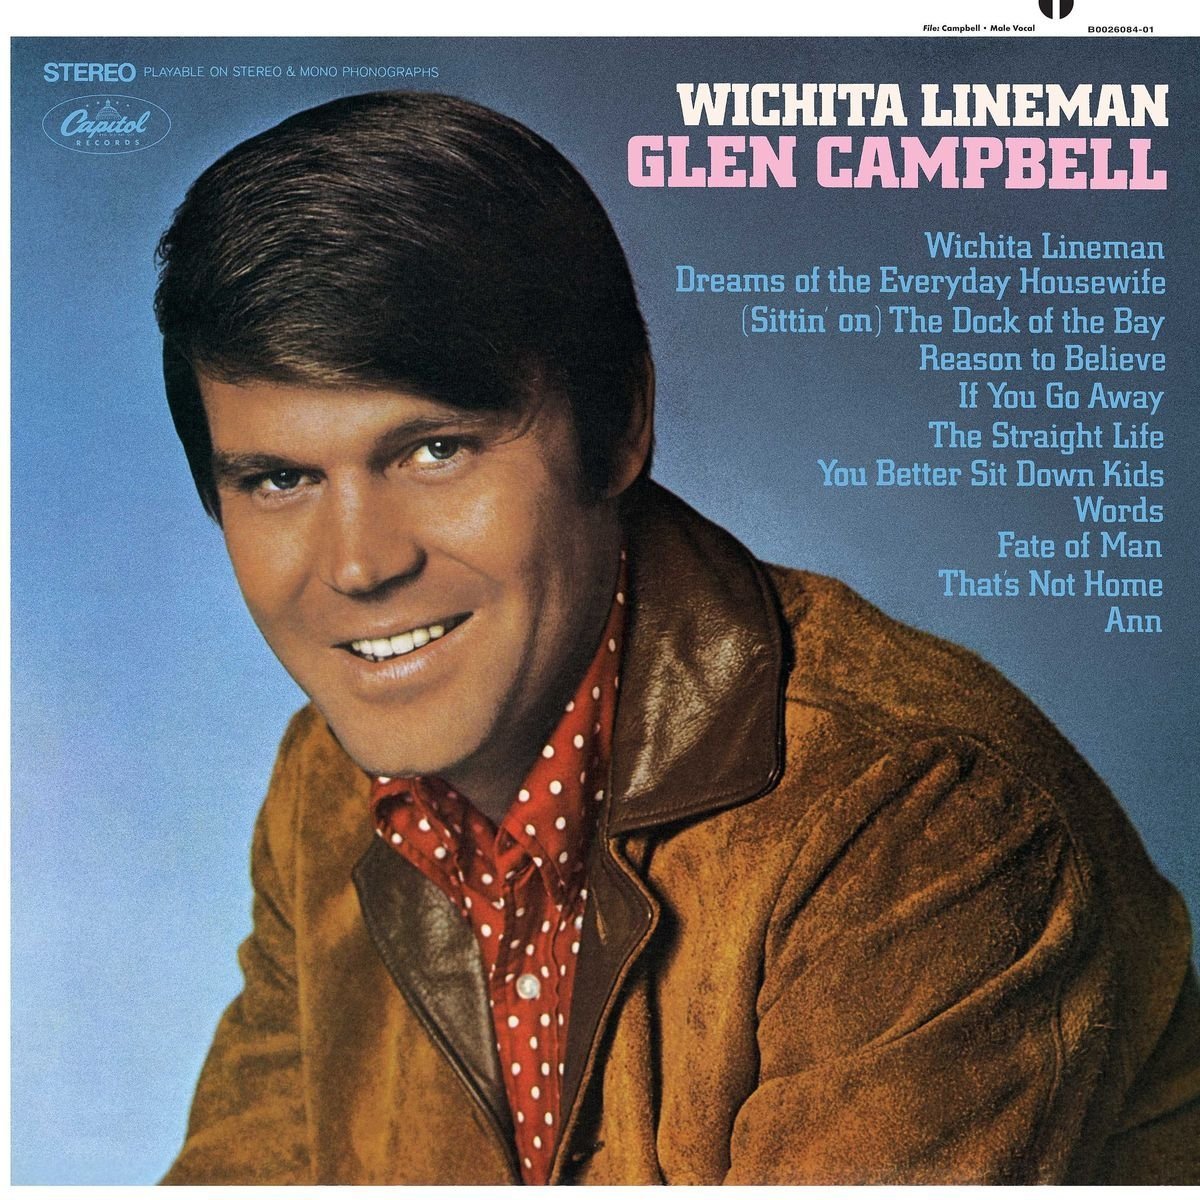 Glen Campbell – Wichita Lineman